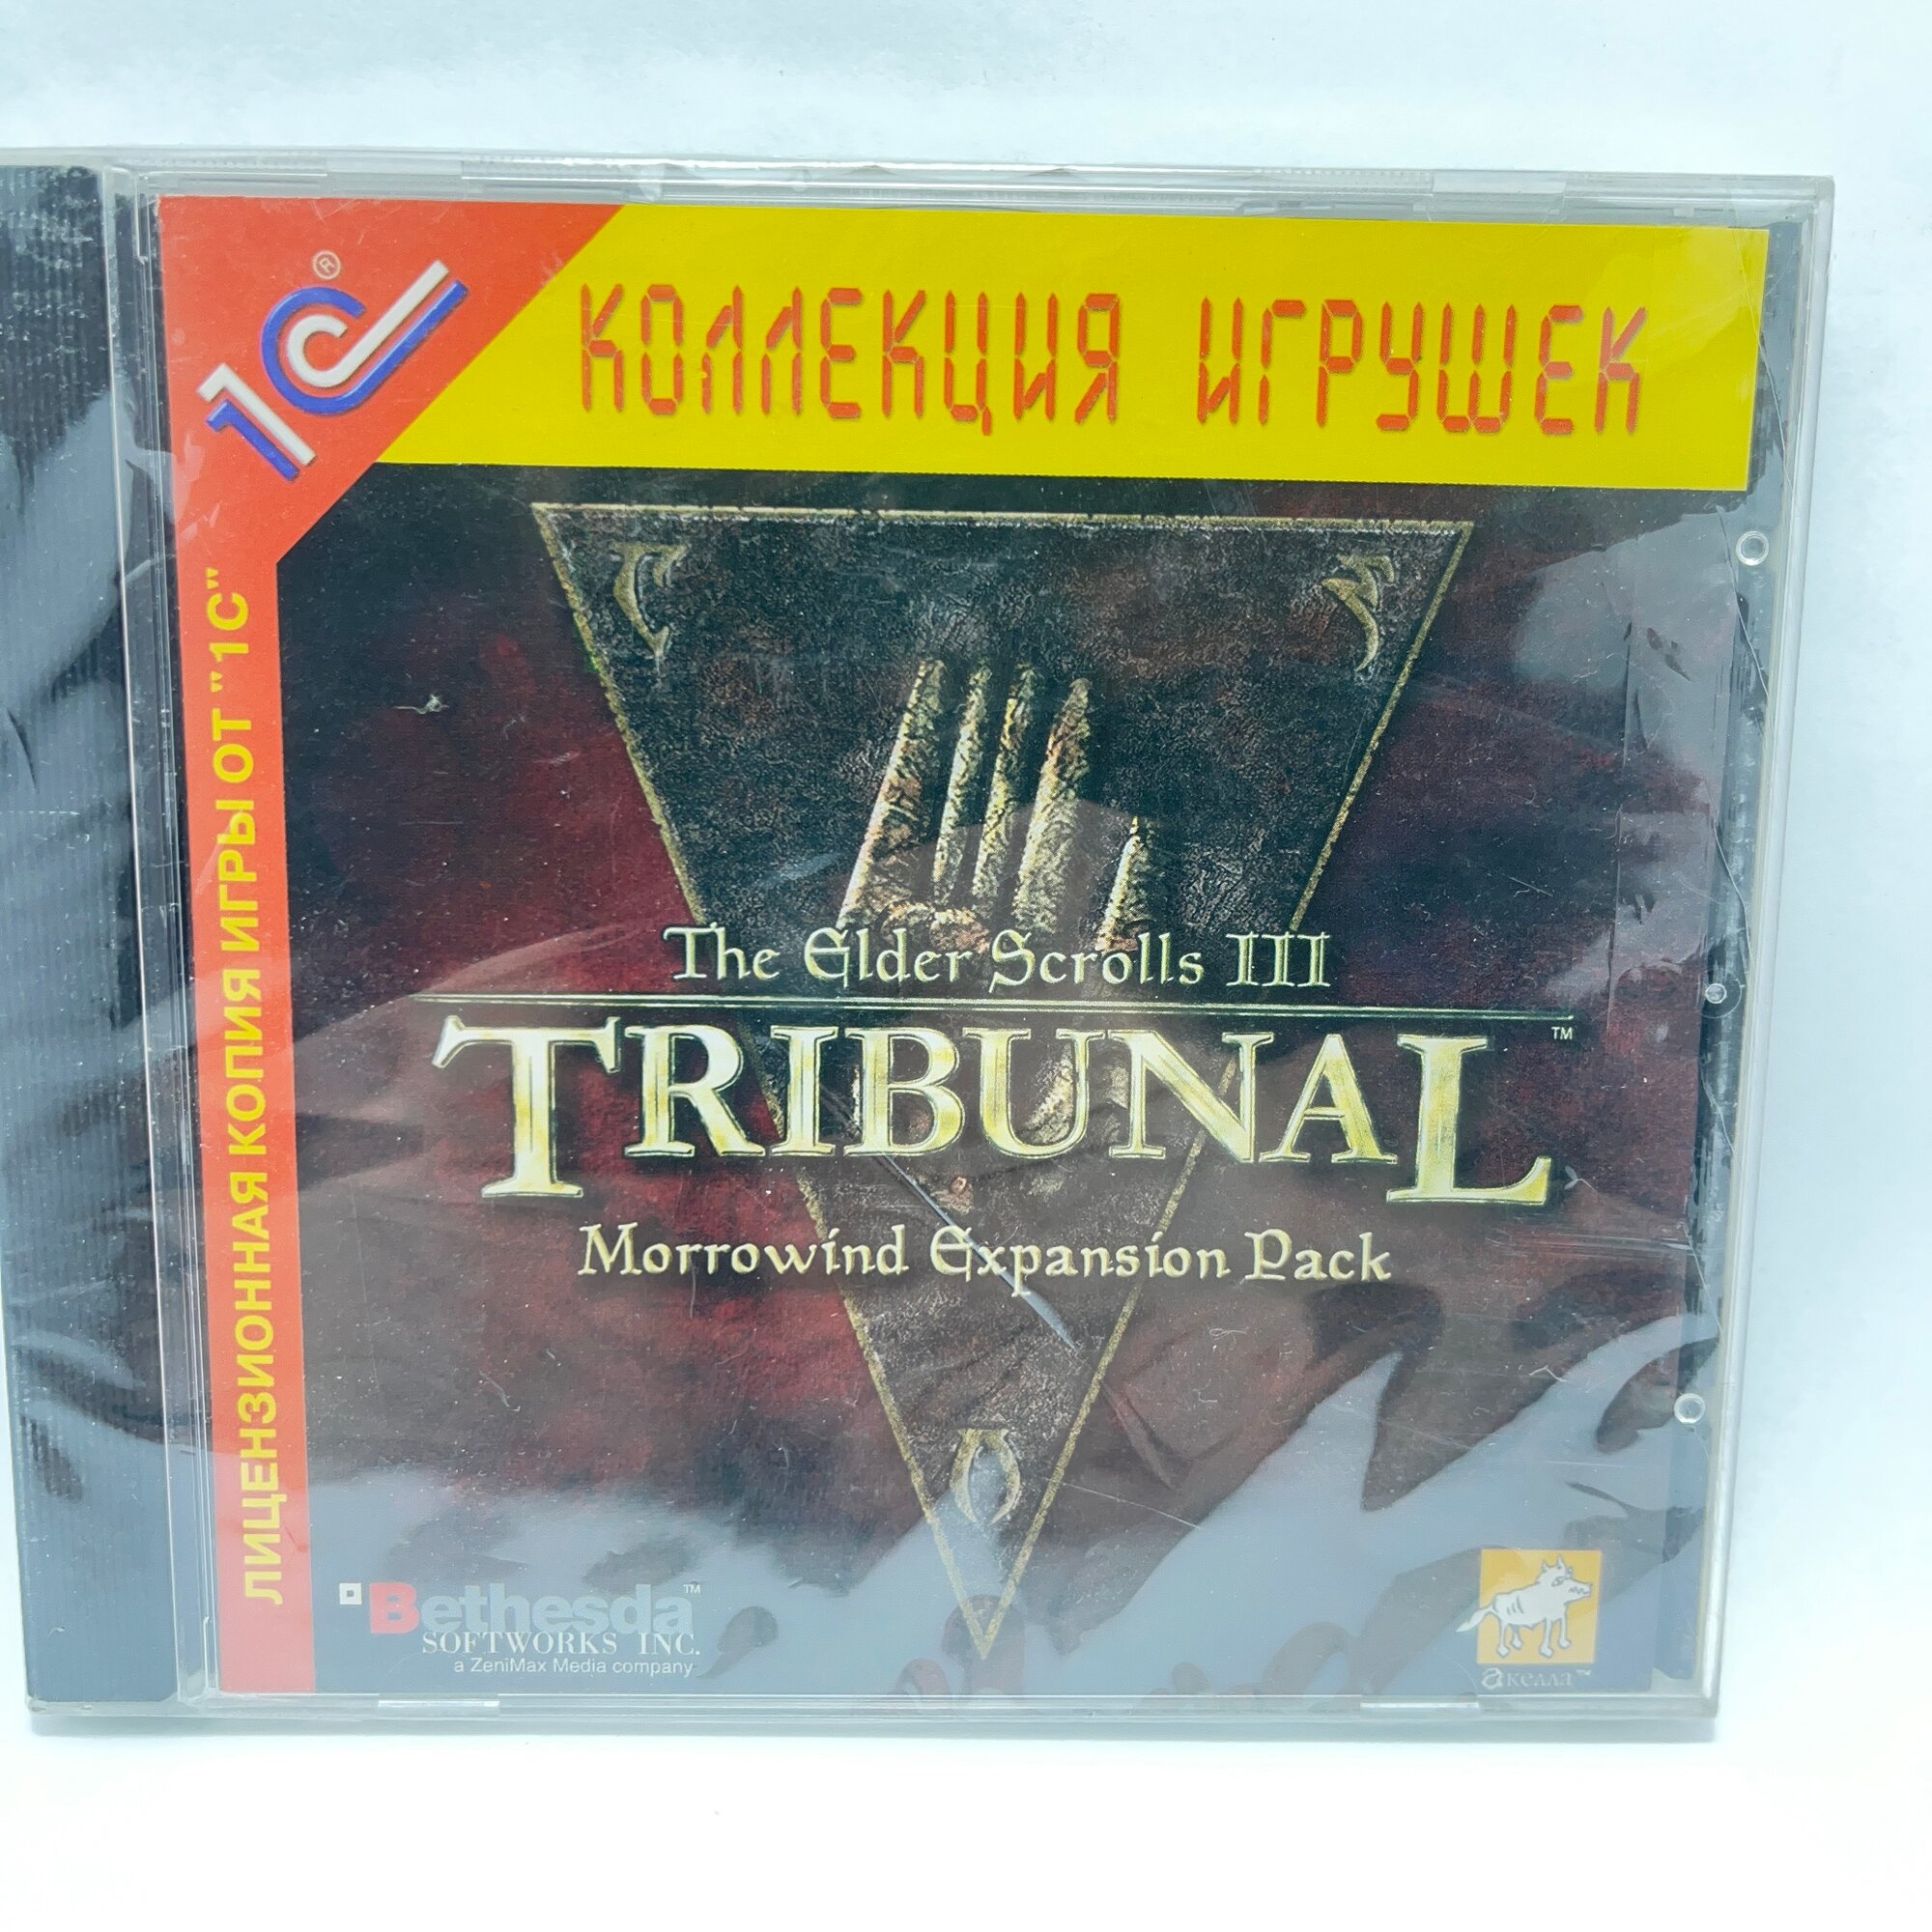 The elder scrolls III Tribunal Morrowind expansion pack